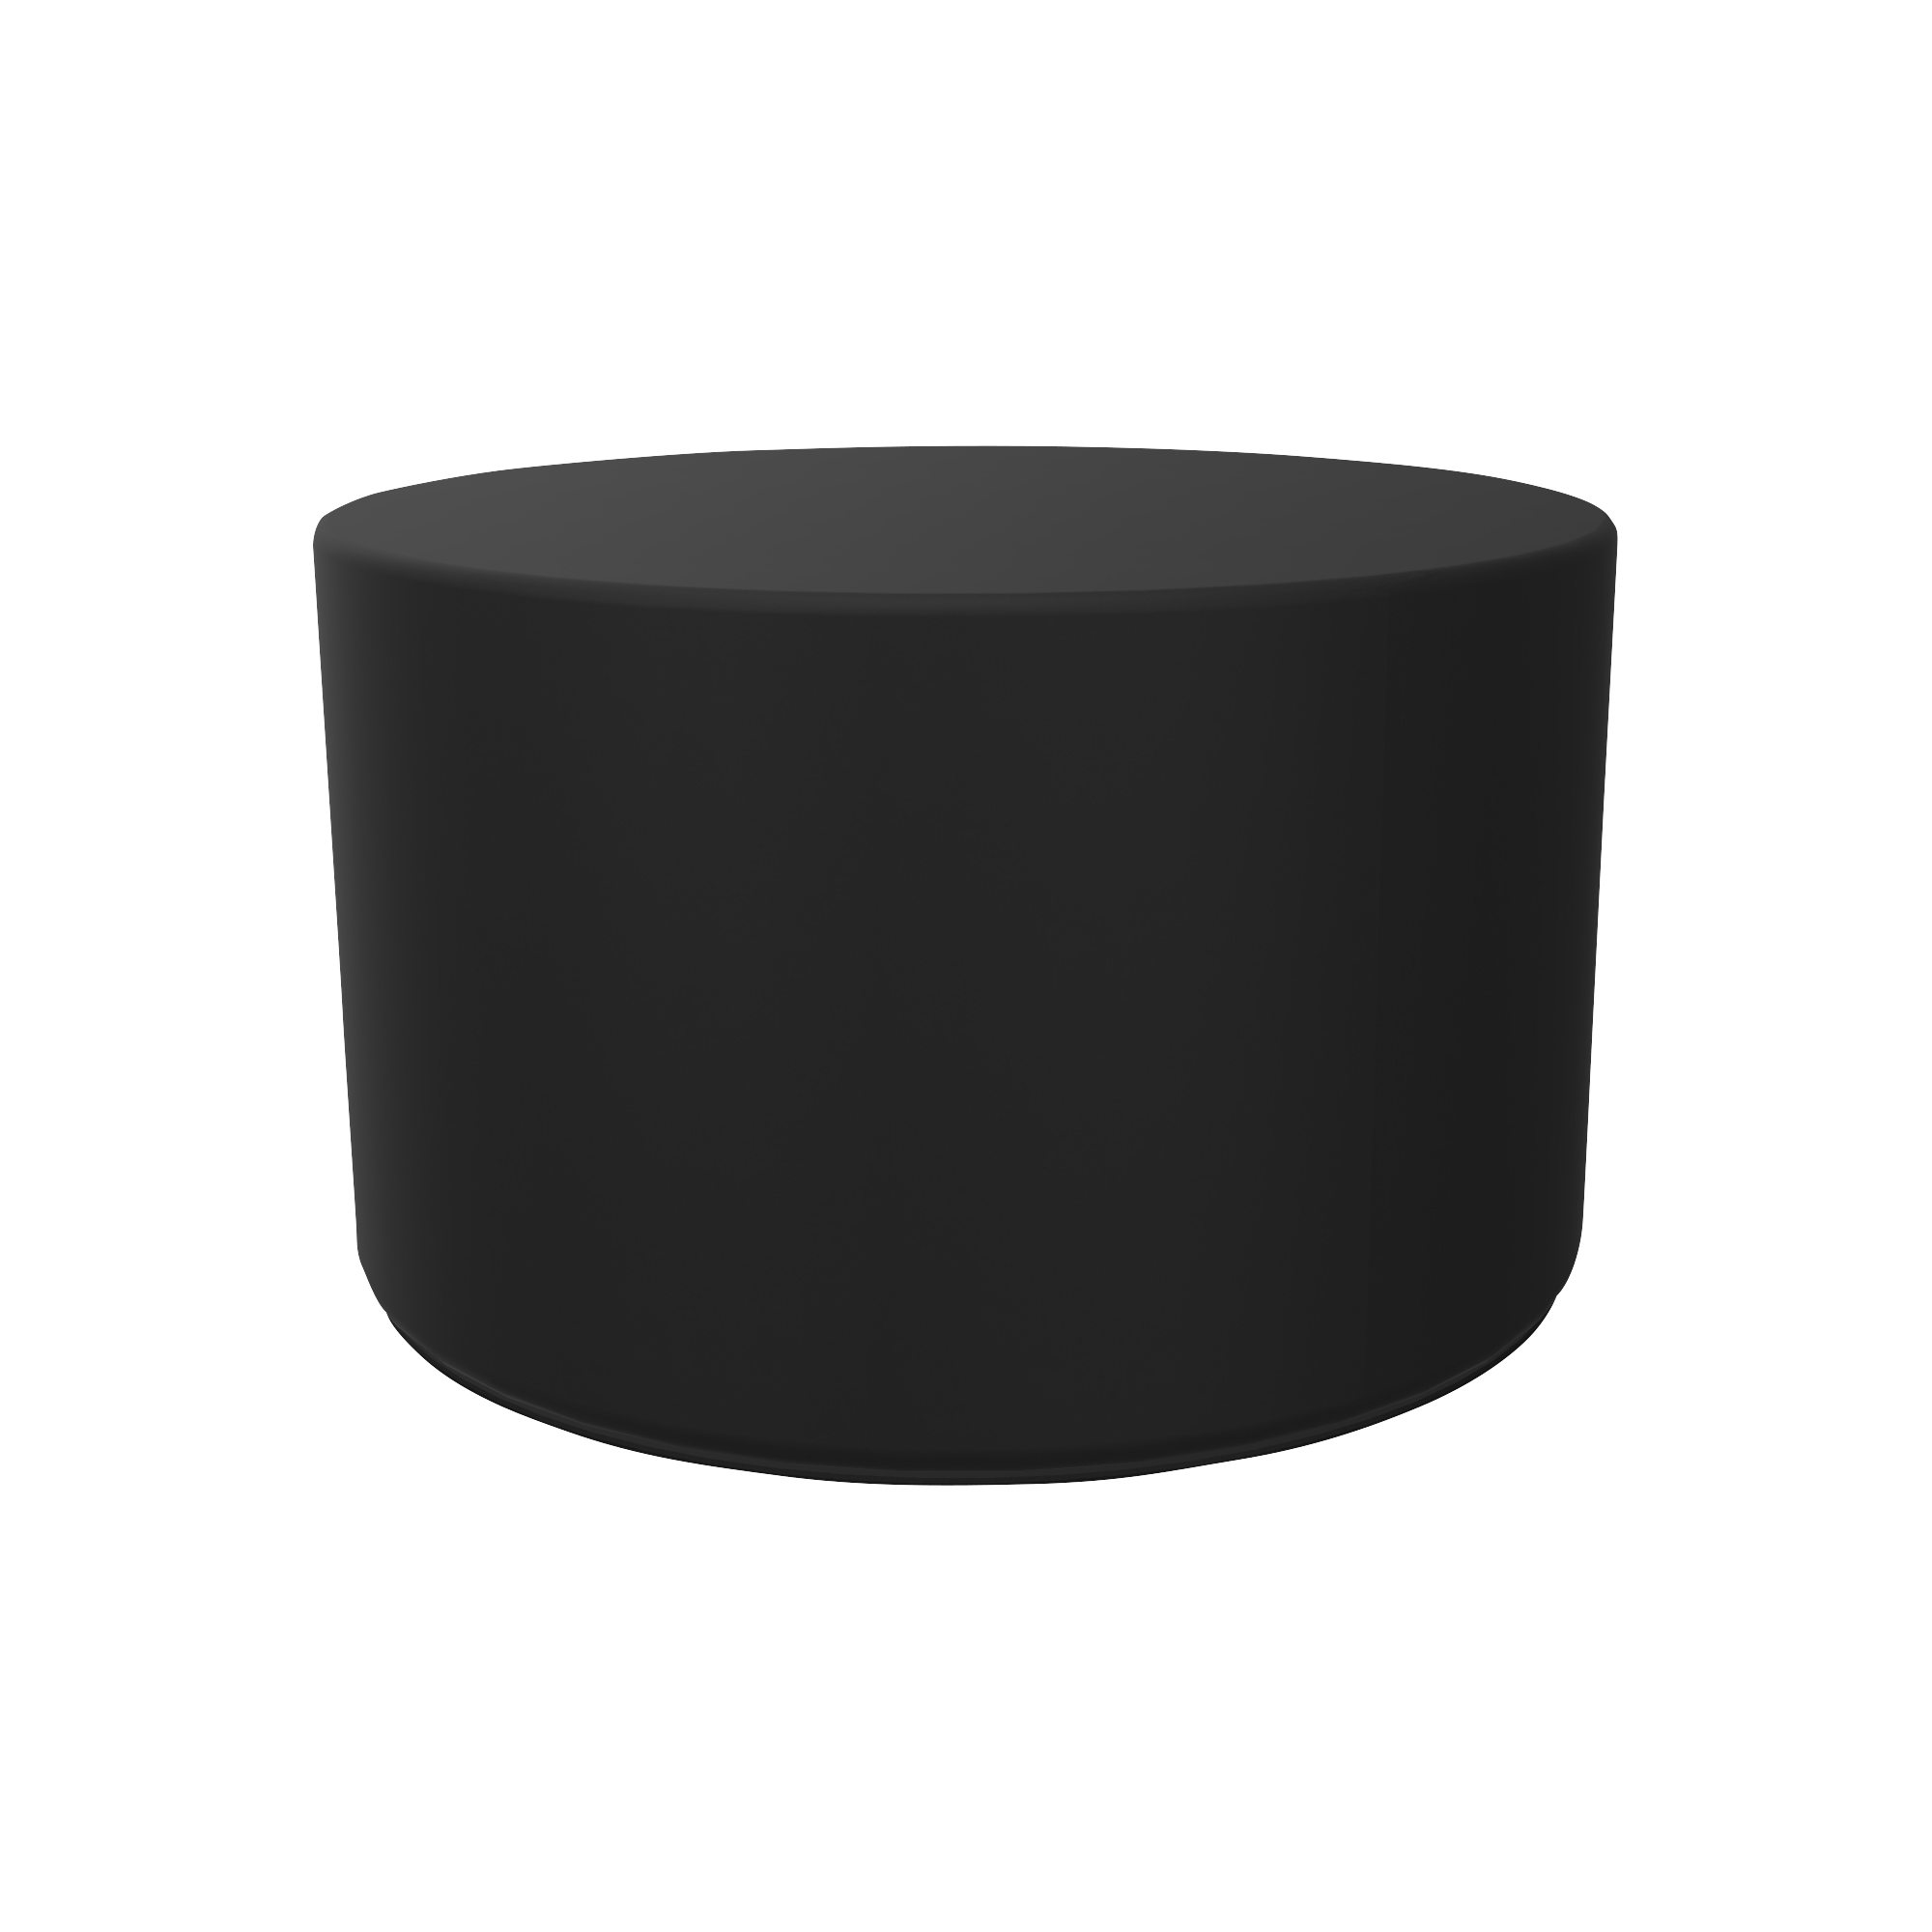 A black cylinder shaped ottomon